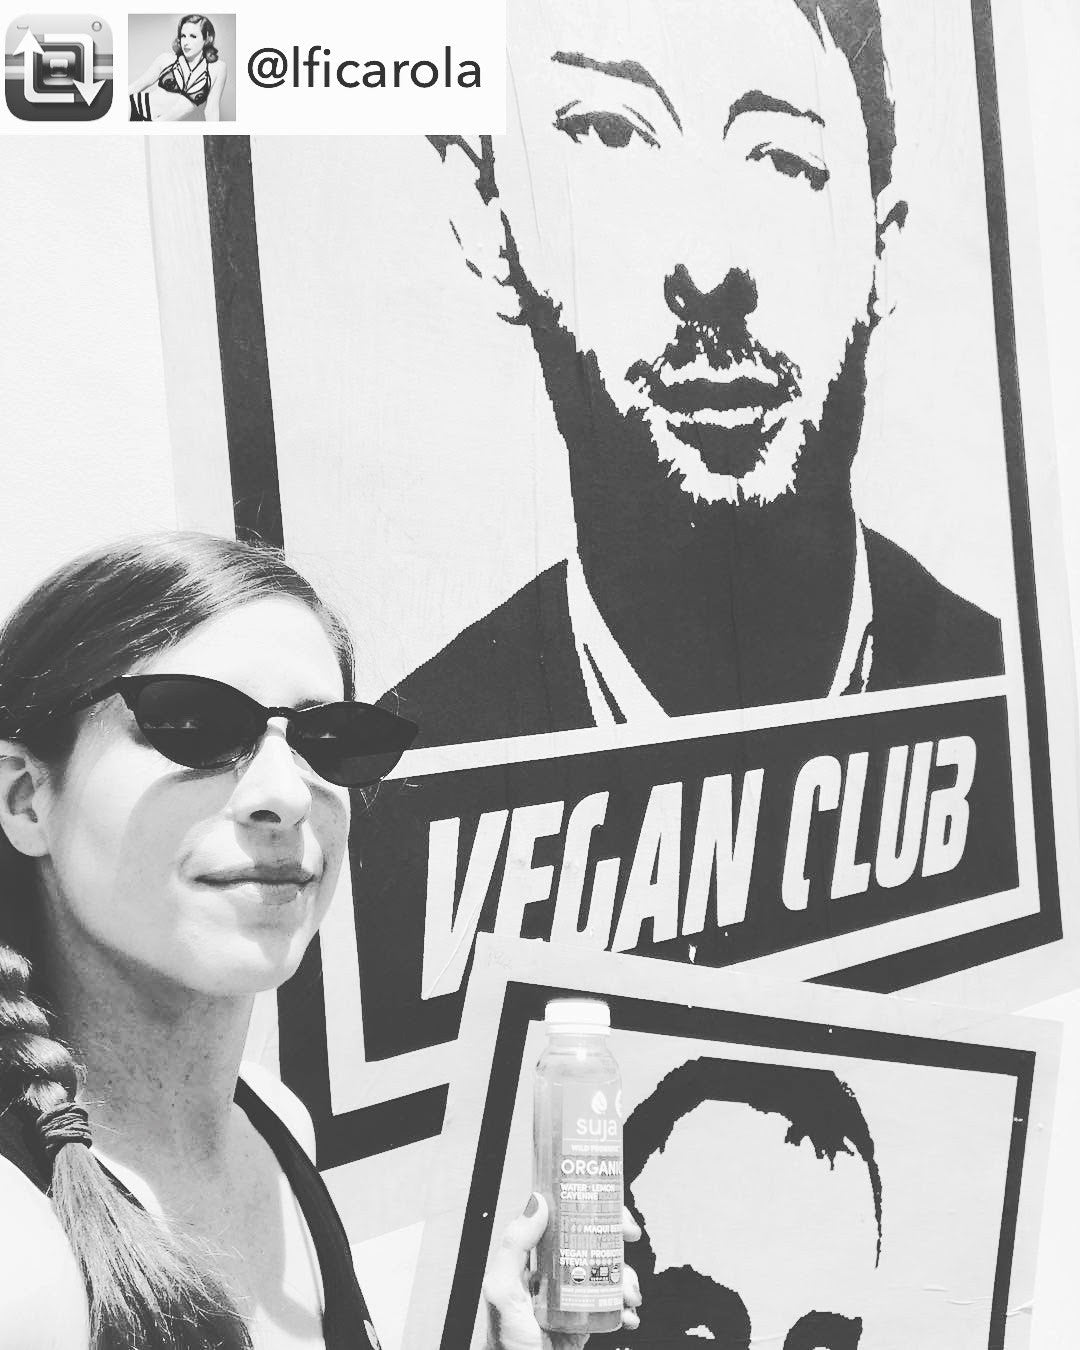 Street Art NewsPrint Poster Vegan Club featuring Thom Yorke  of RadioHead art by LeFou - model @lficarola